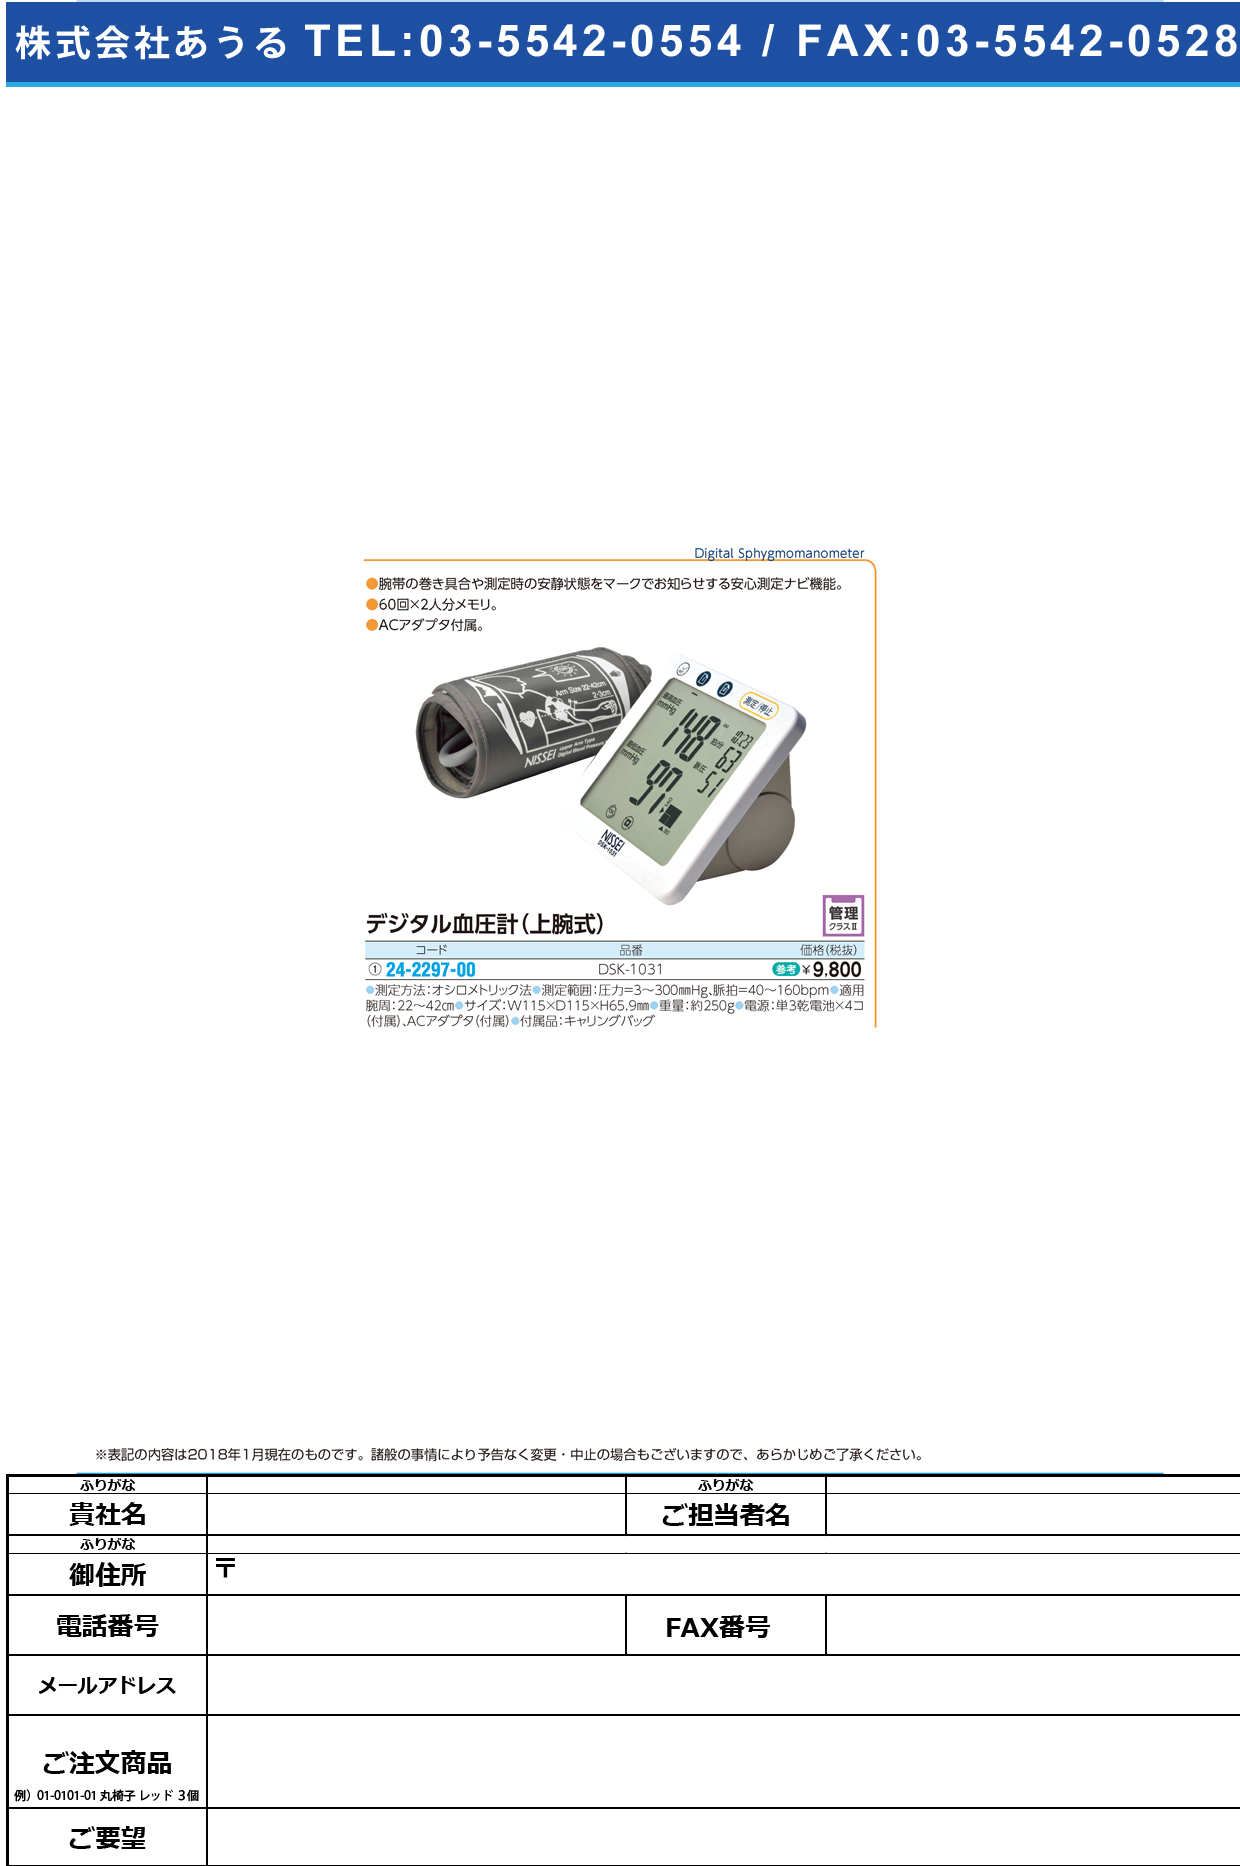 (24-2297-00)上腕式デジタル血圧計 DSK-1031 ｼﾞｮｳﾜﾝｼｷﾃﾞｼﾞﾀﾙｹﾂｱﾂｹｲ(日本精密測器)【1台単位】【2019年カタログ商品】